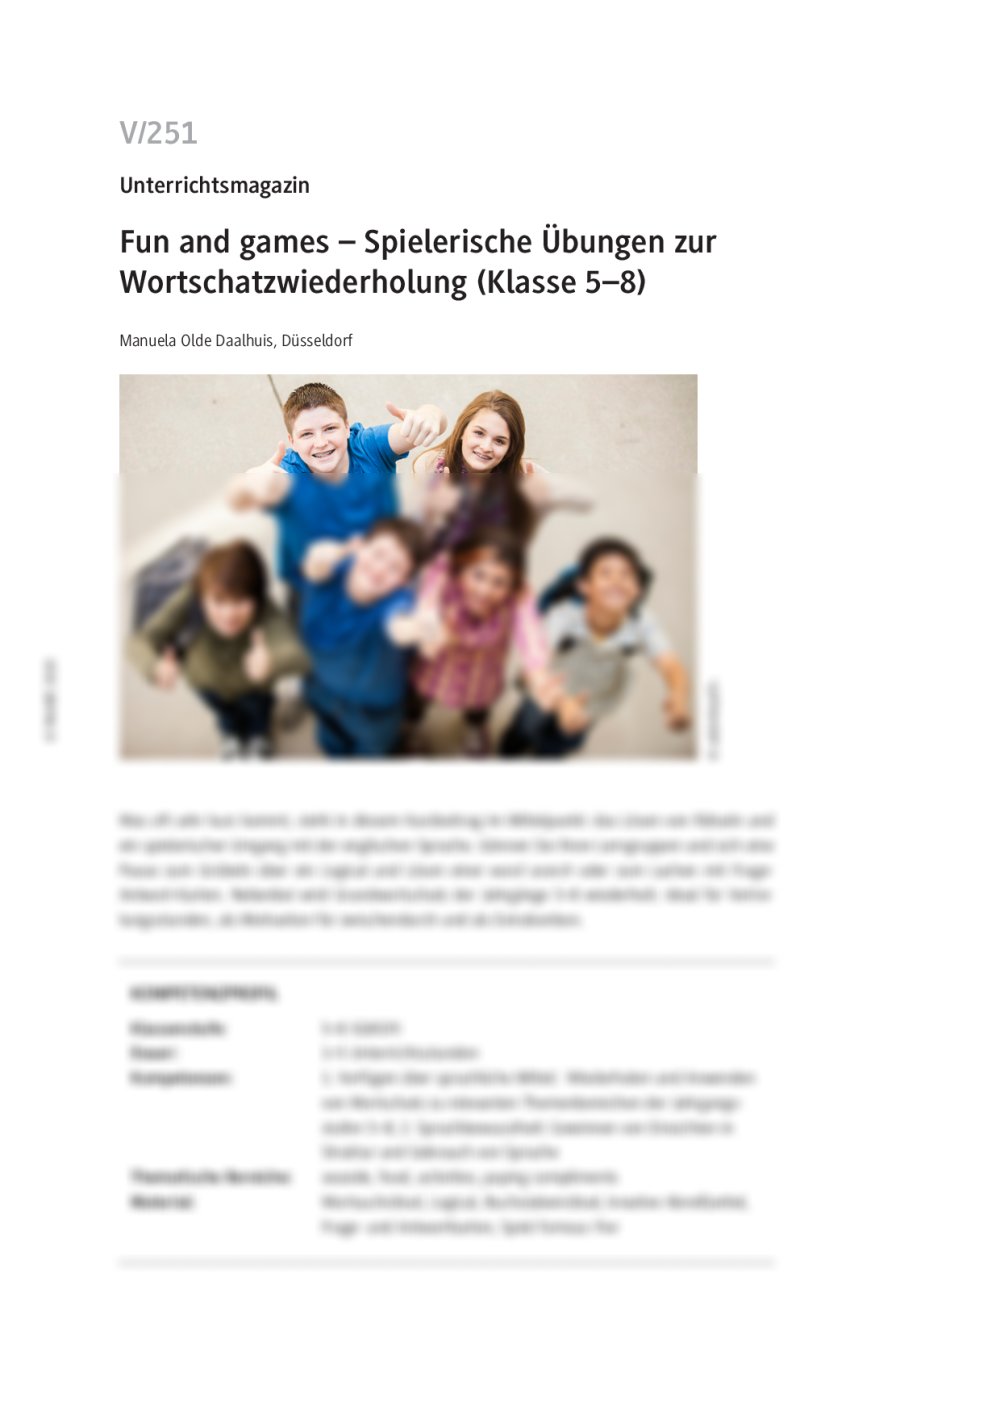 Fun and games - Seite 1